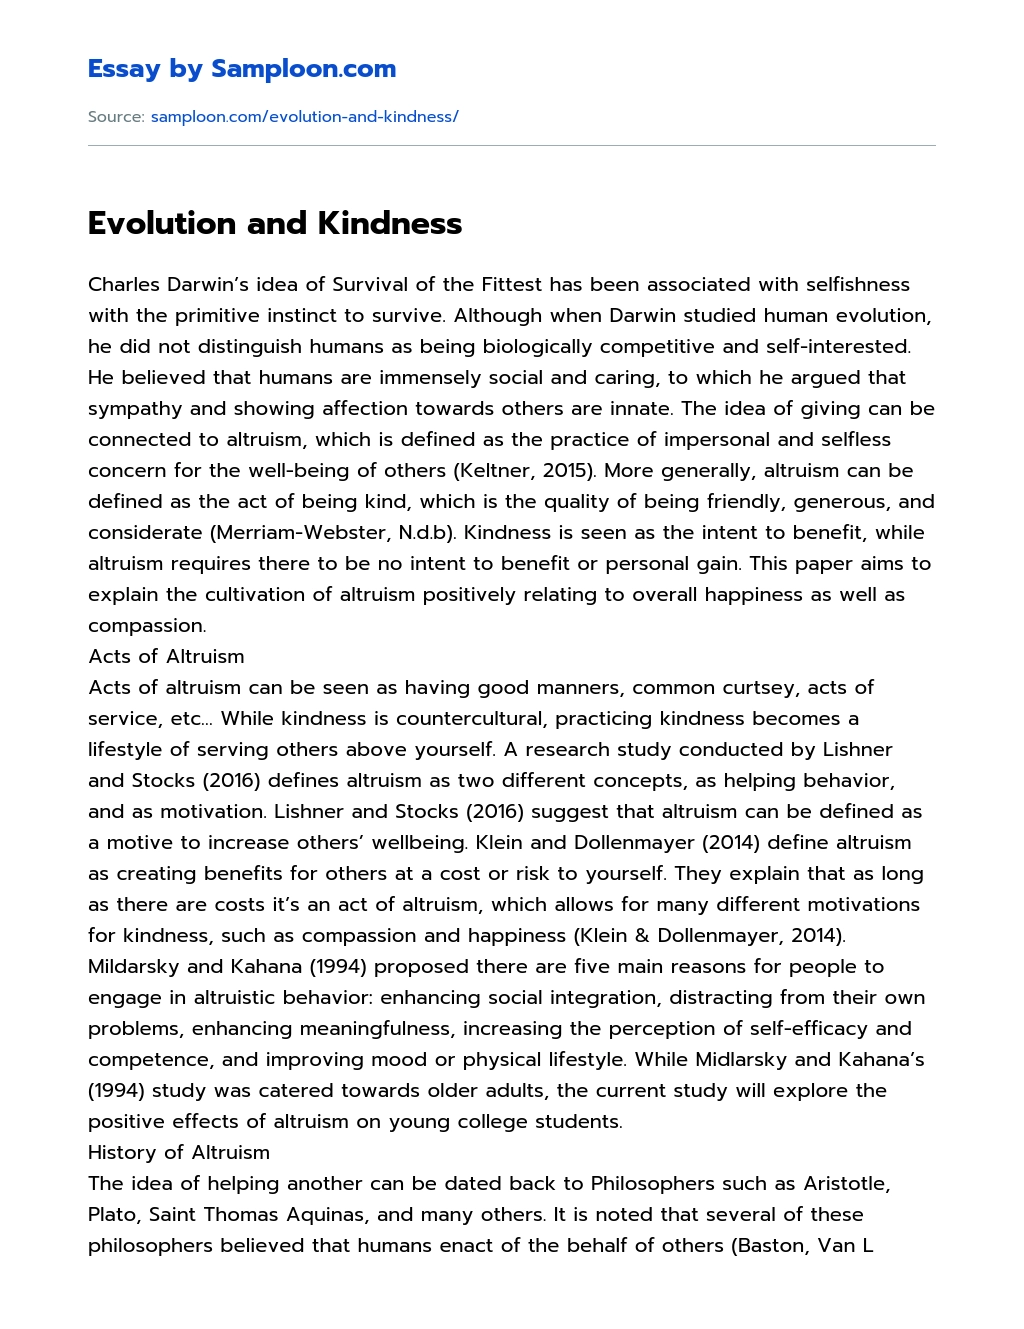 Evolution and Kindness essay